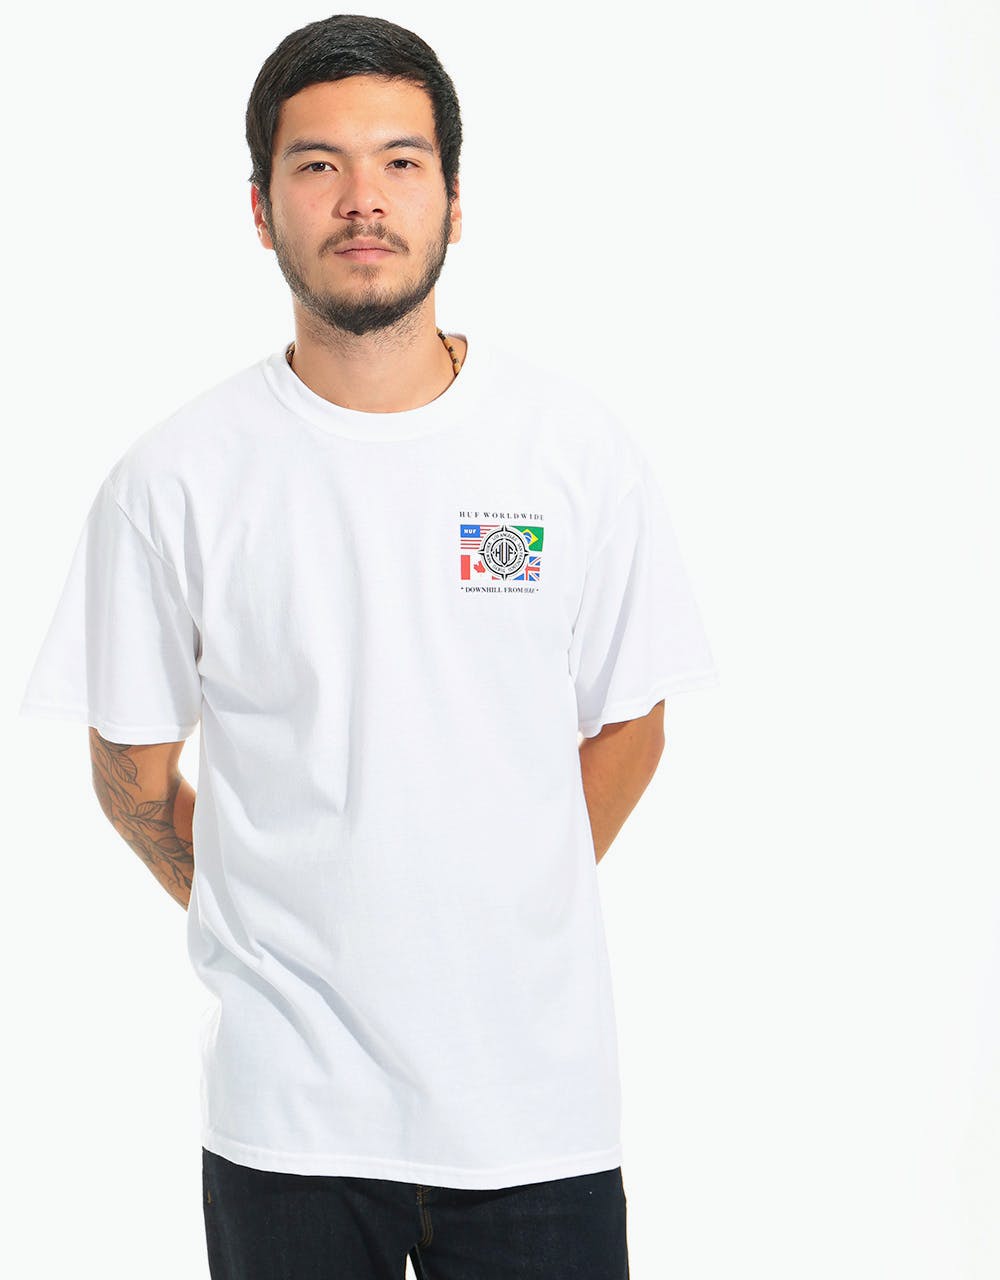 HUF Global Wave T-Shirt - White